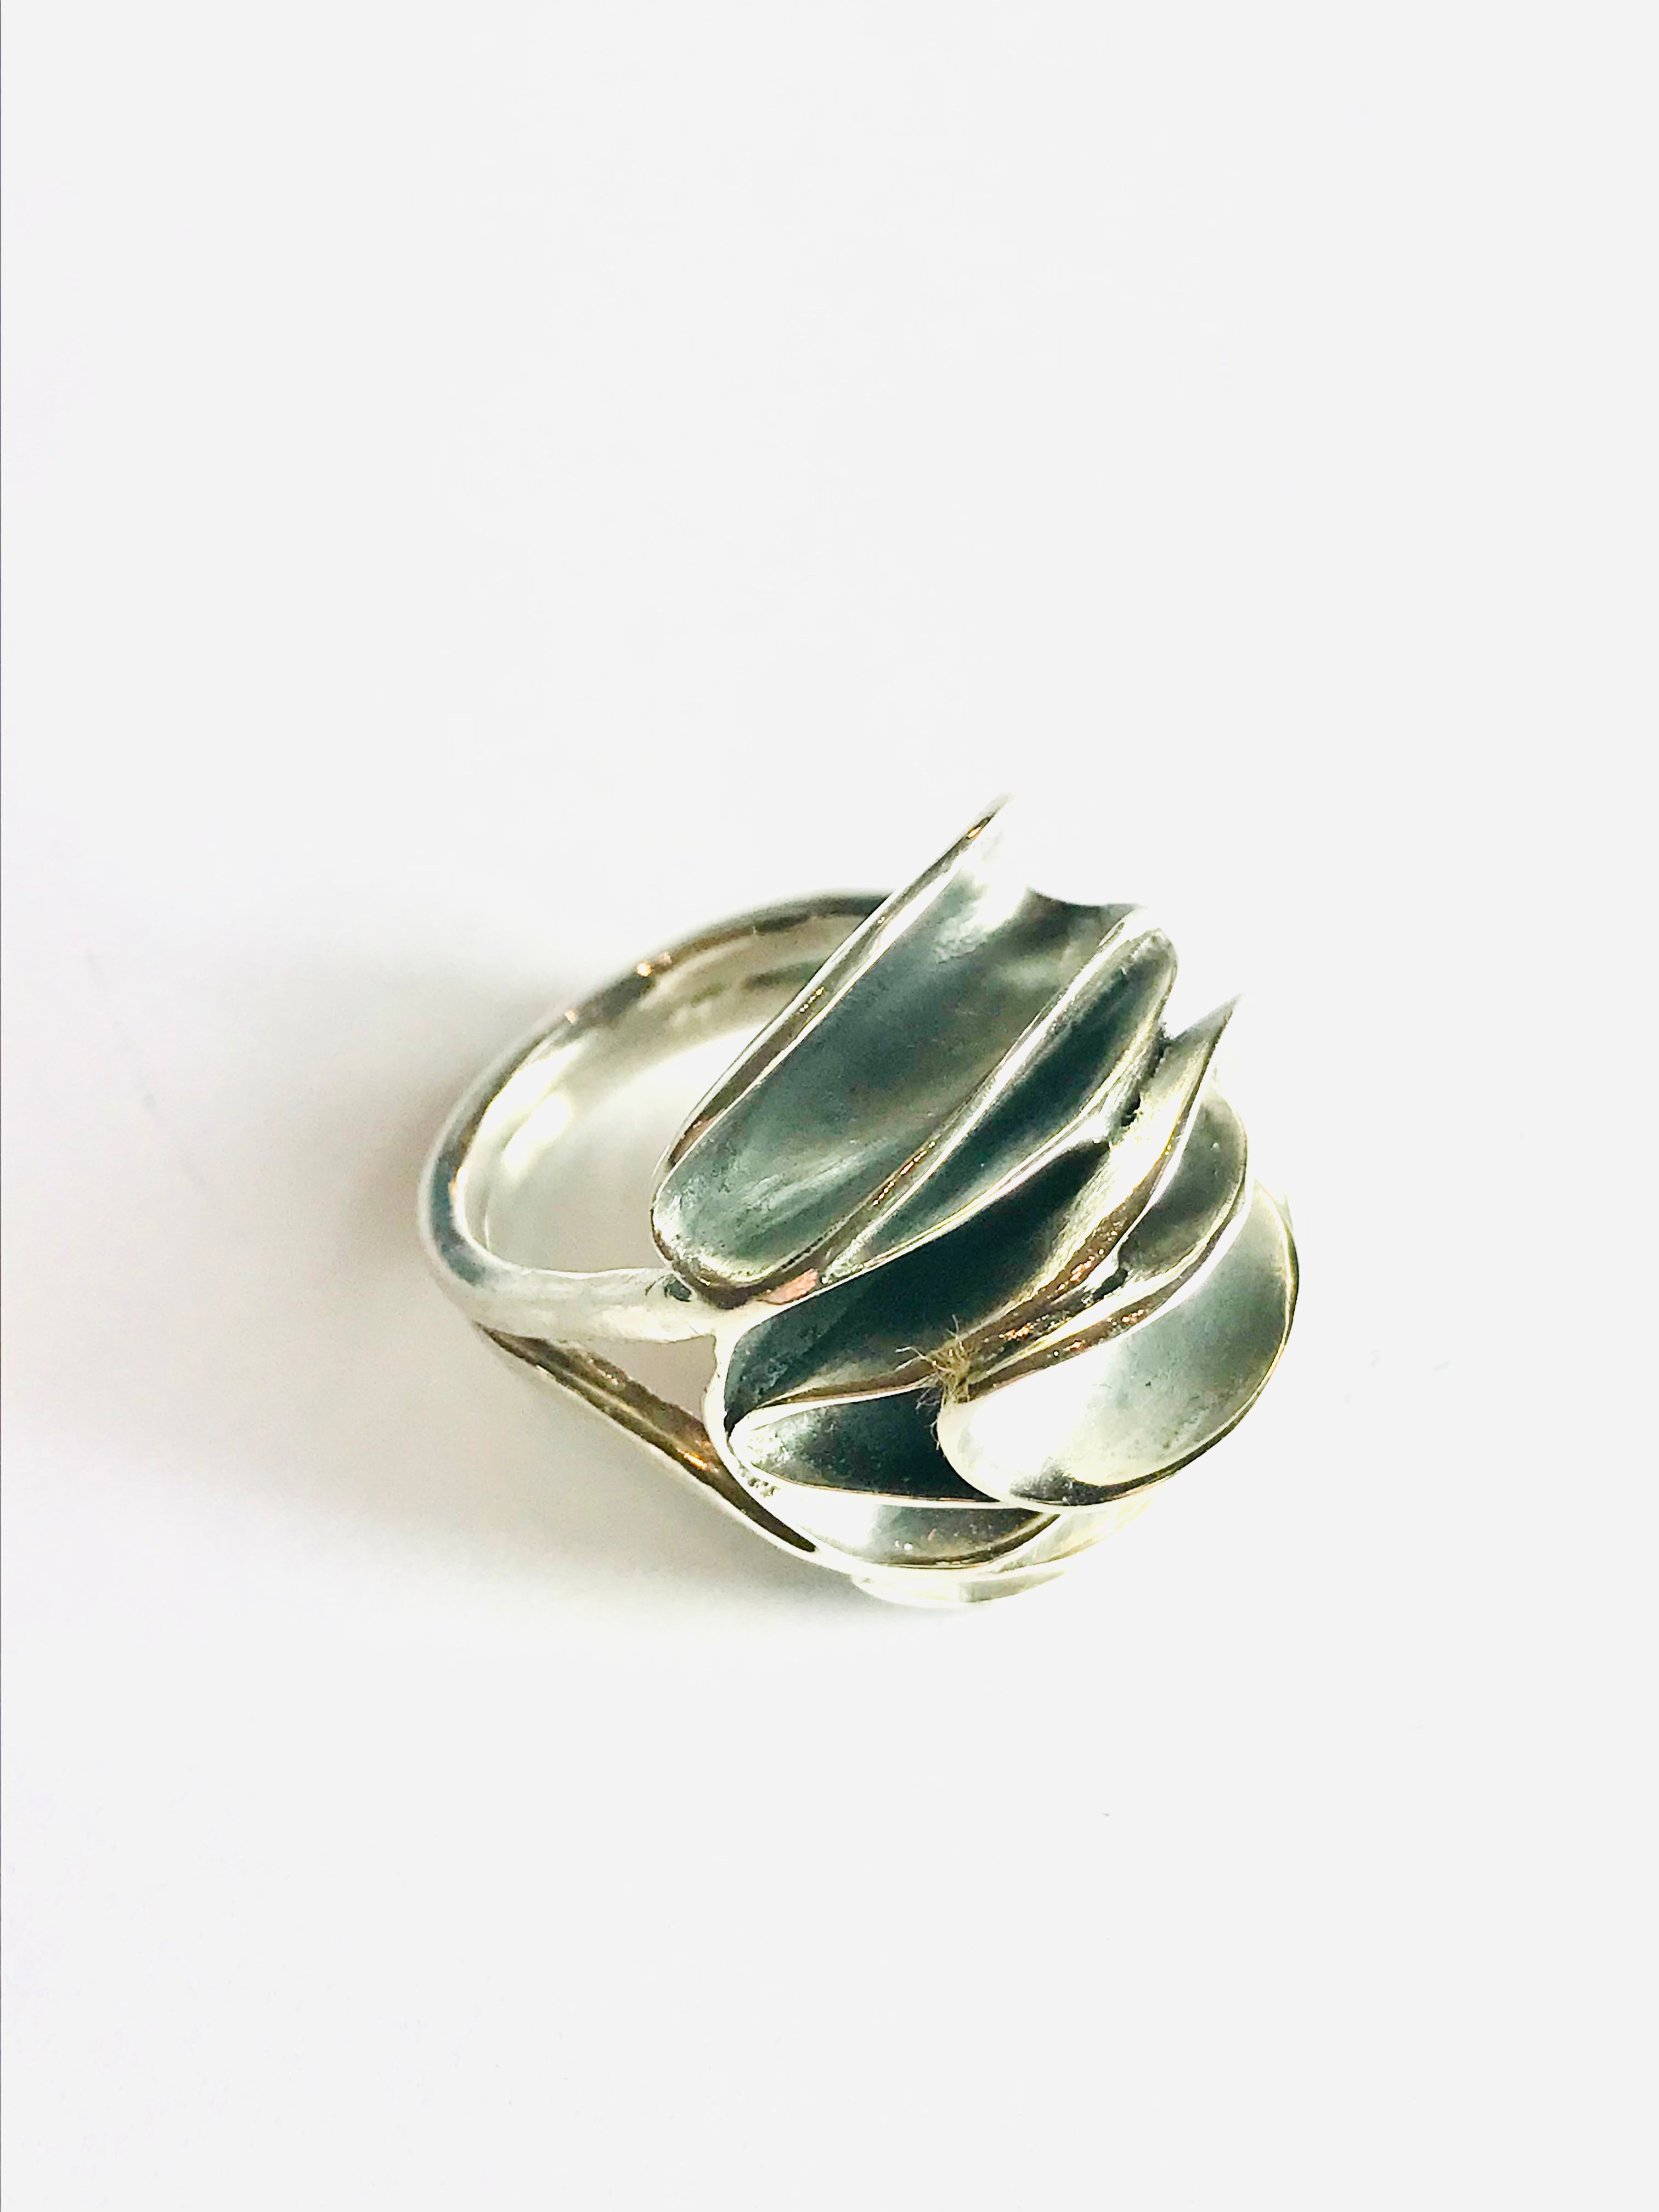 Folded Ring - The Nancy Smillie Shop - Art, Jewellery & Designer Gifts Glasgow